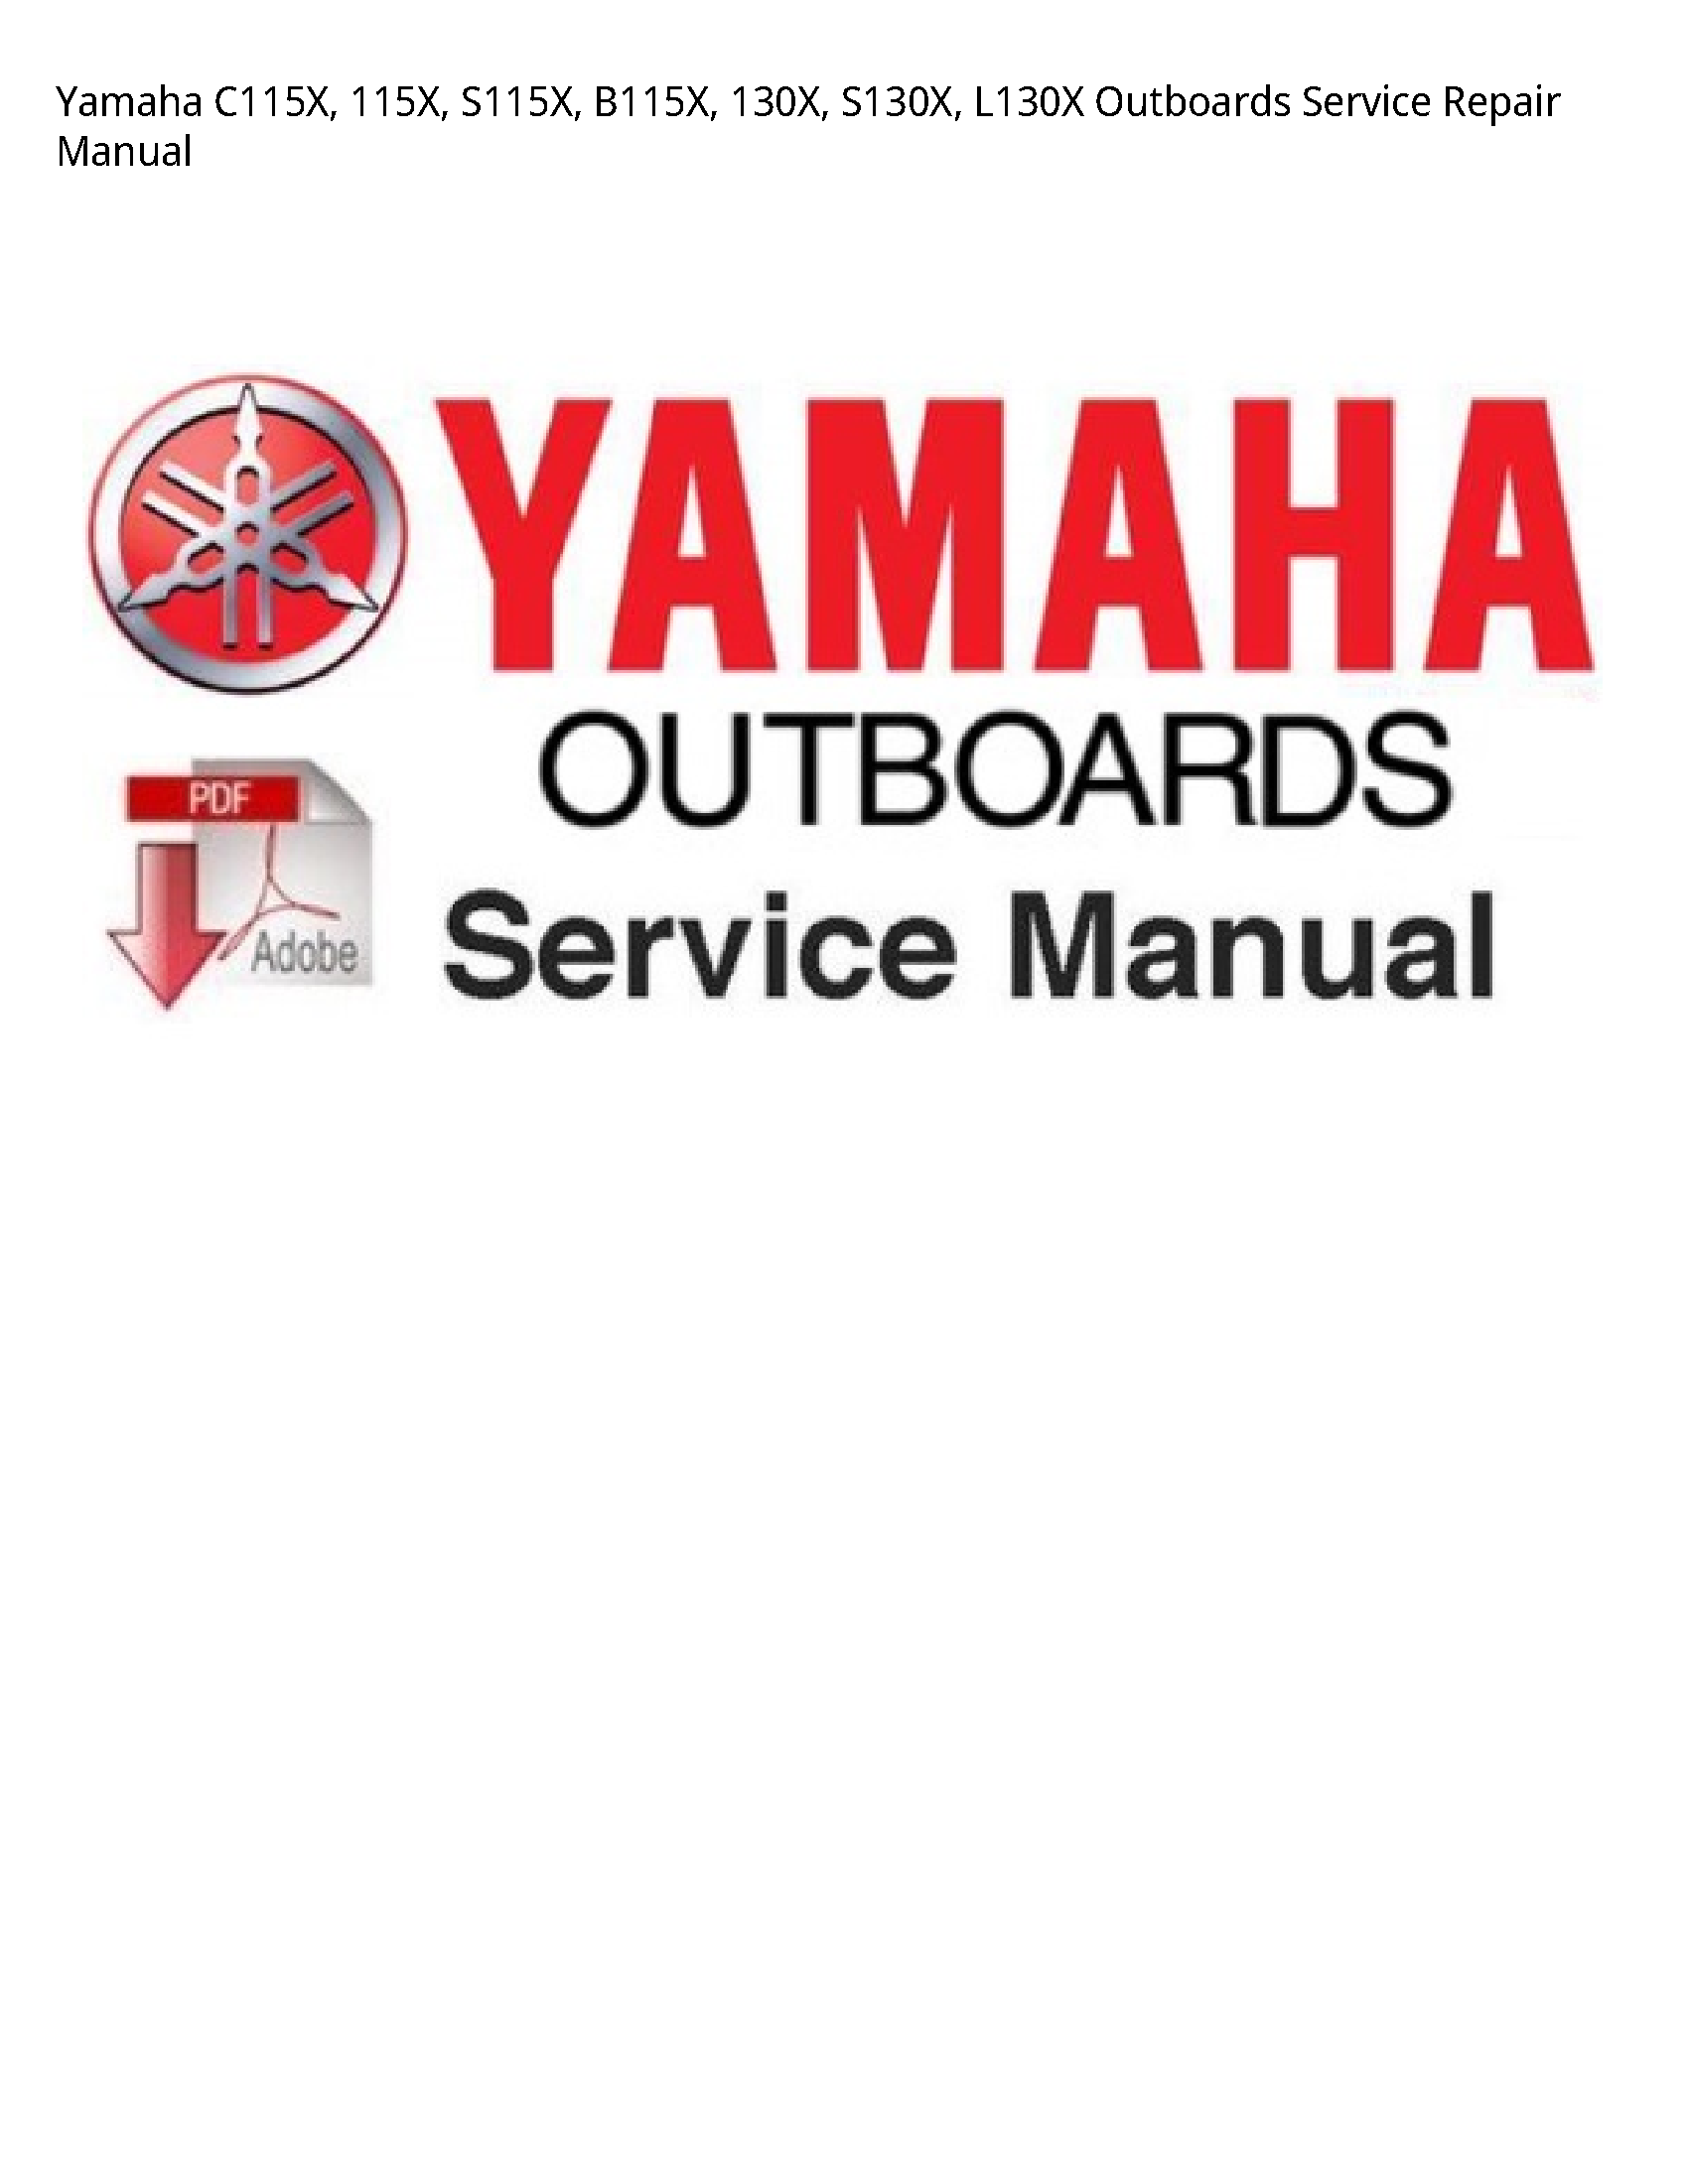 Yamaha C115X Outboards manual